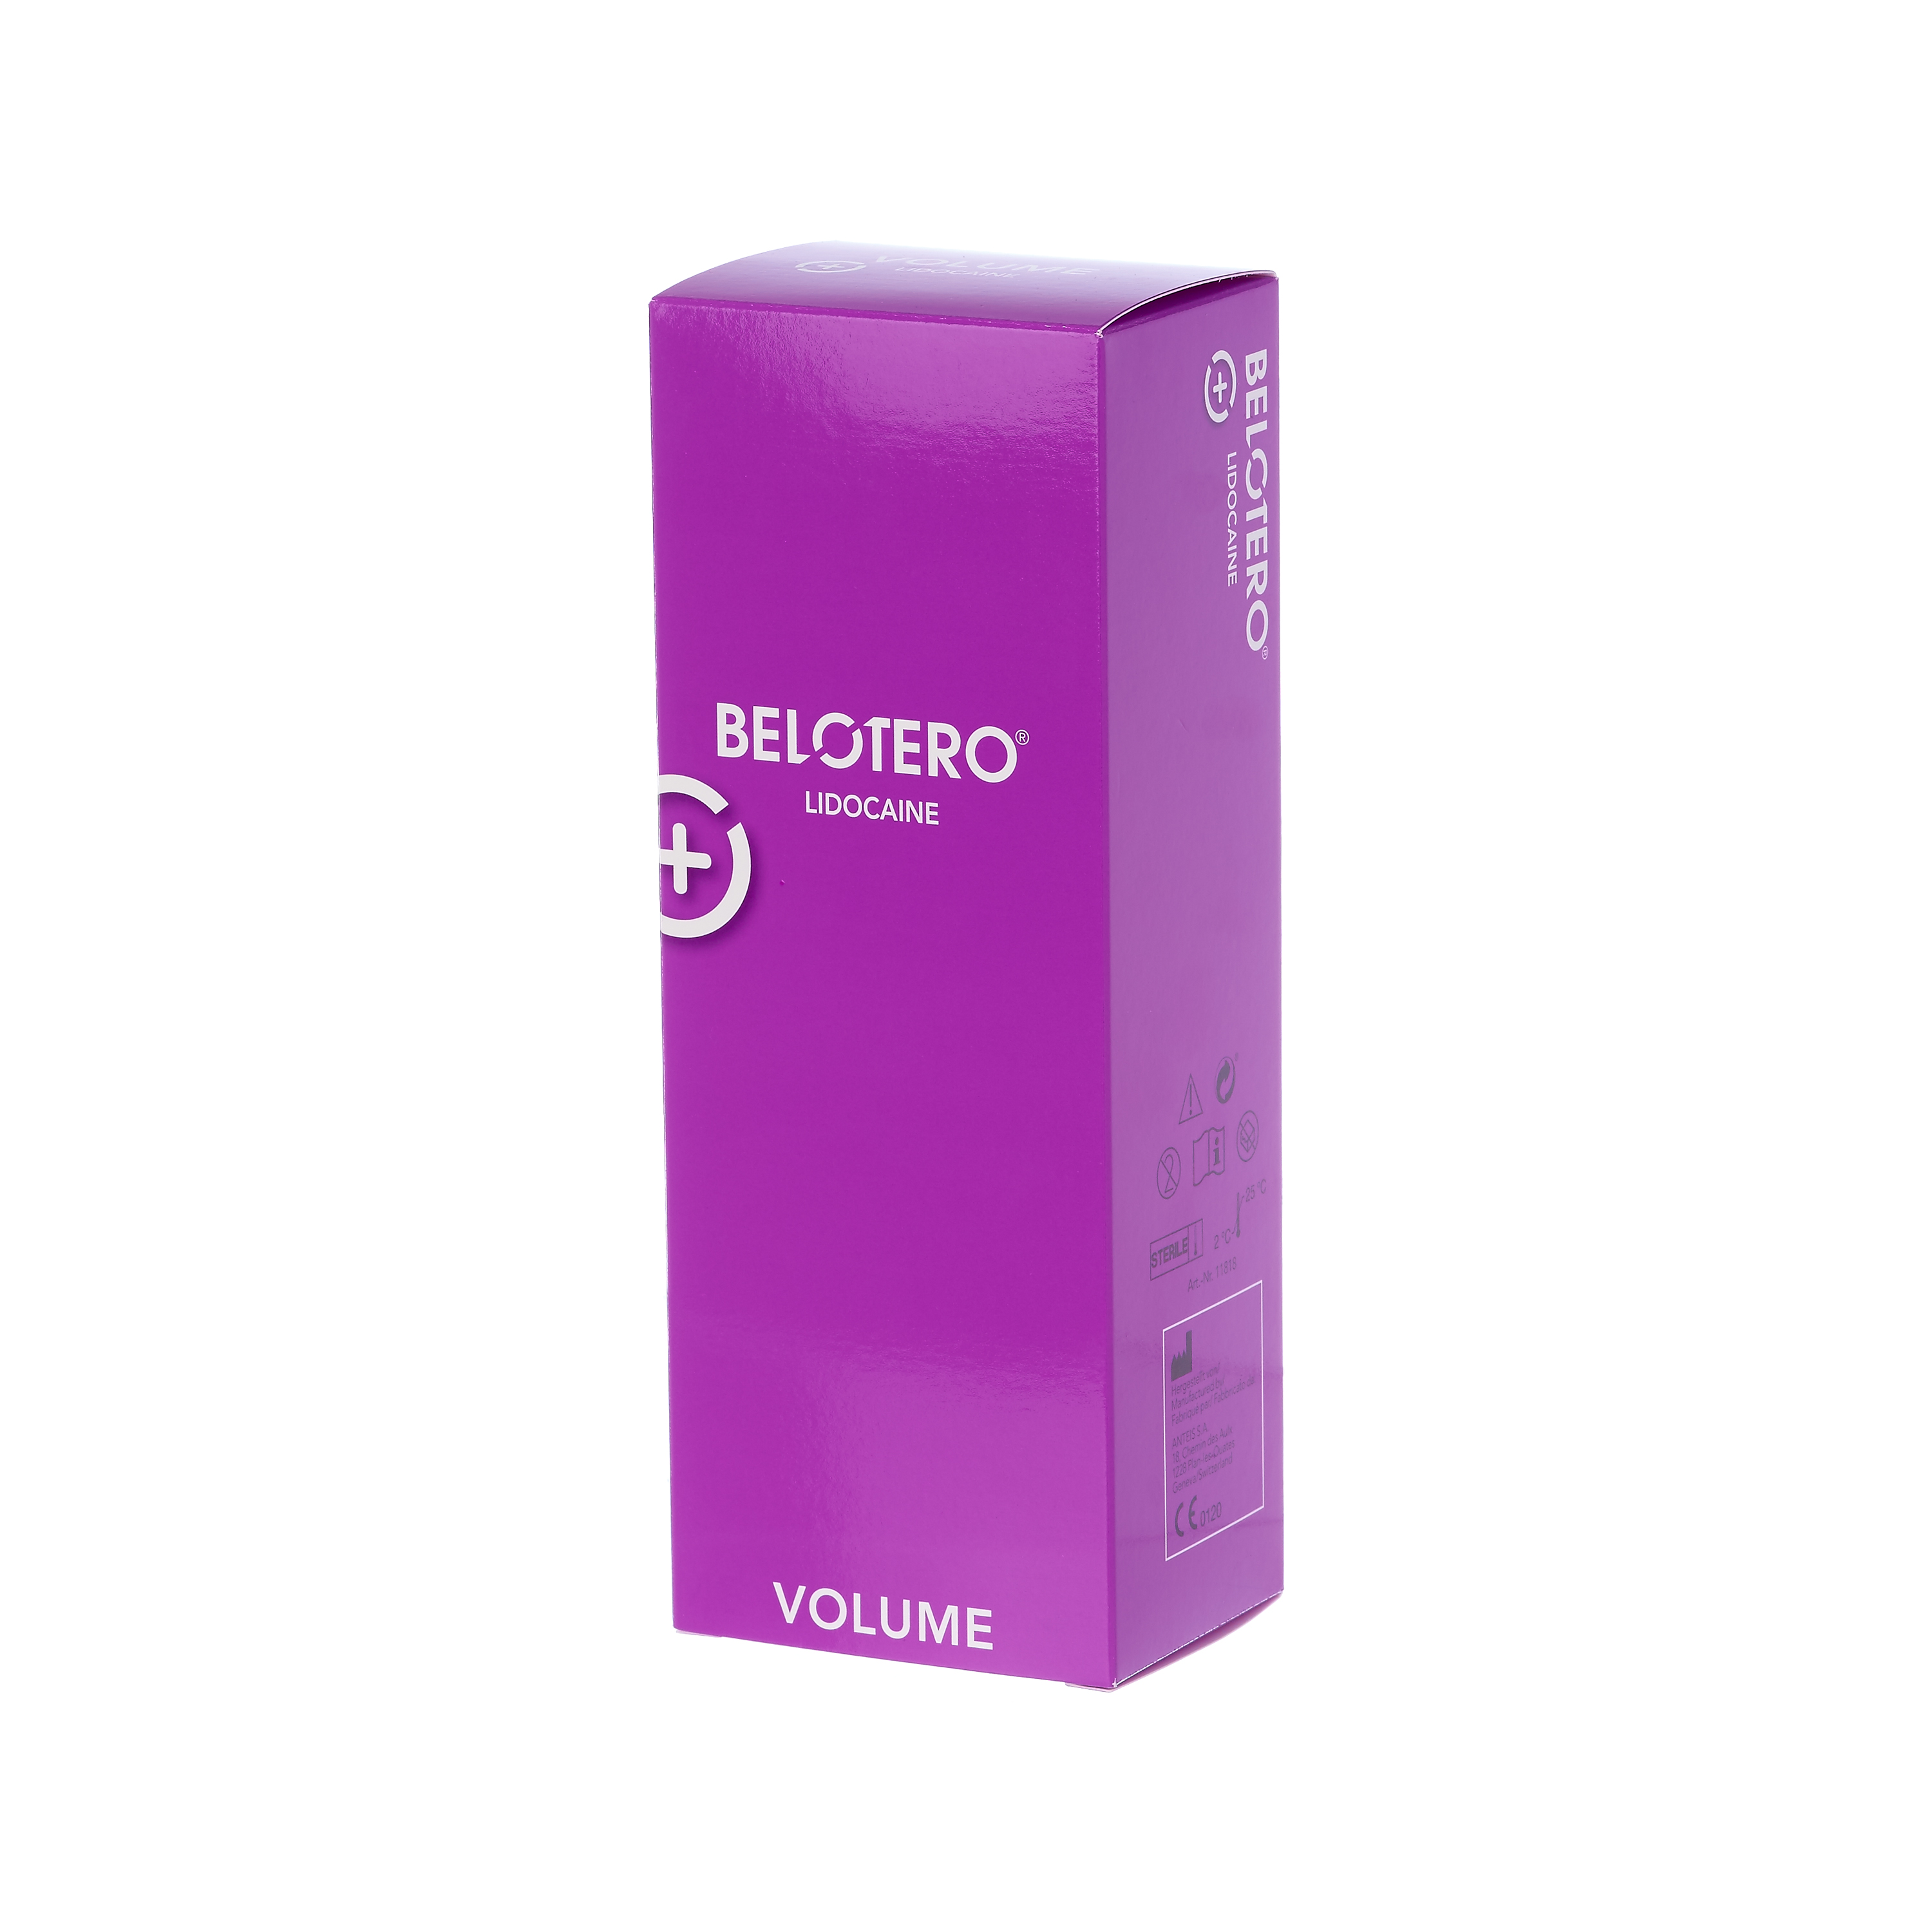 Belotero Volume with Lidocaine 